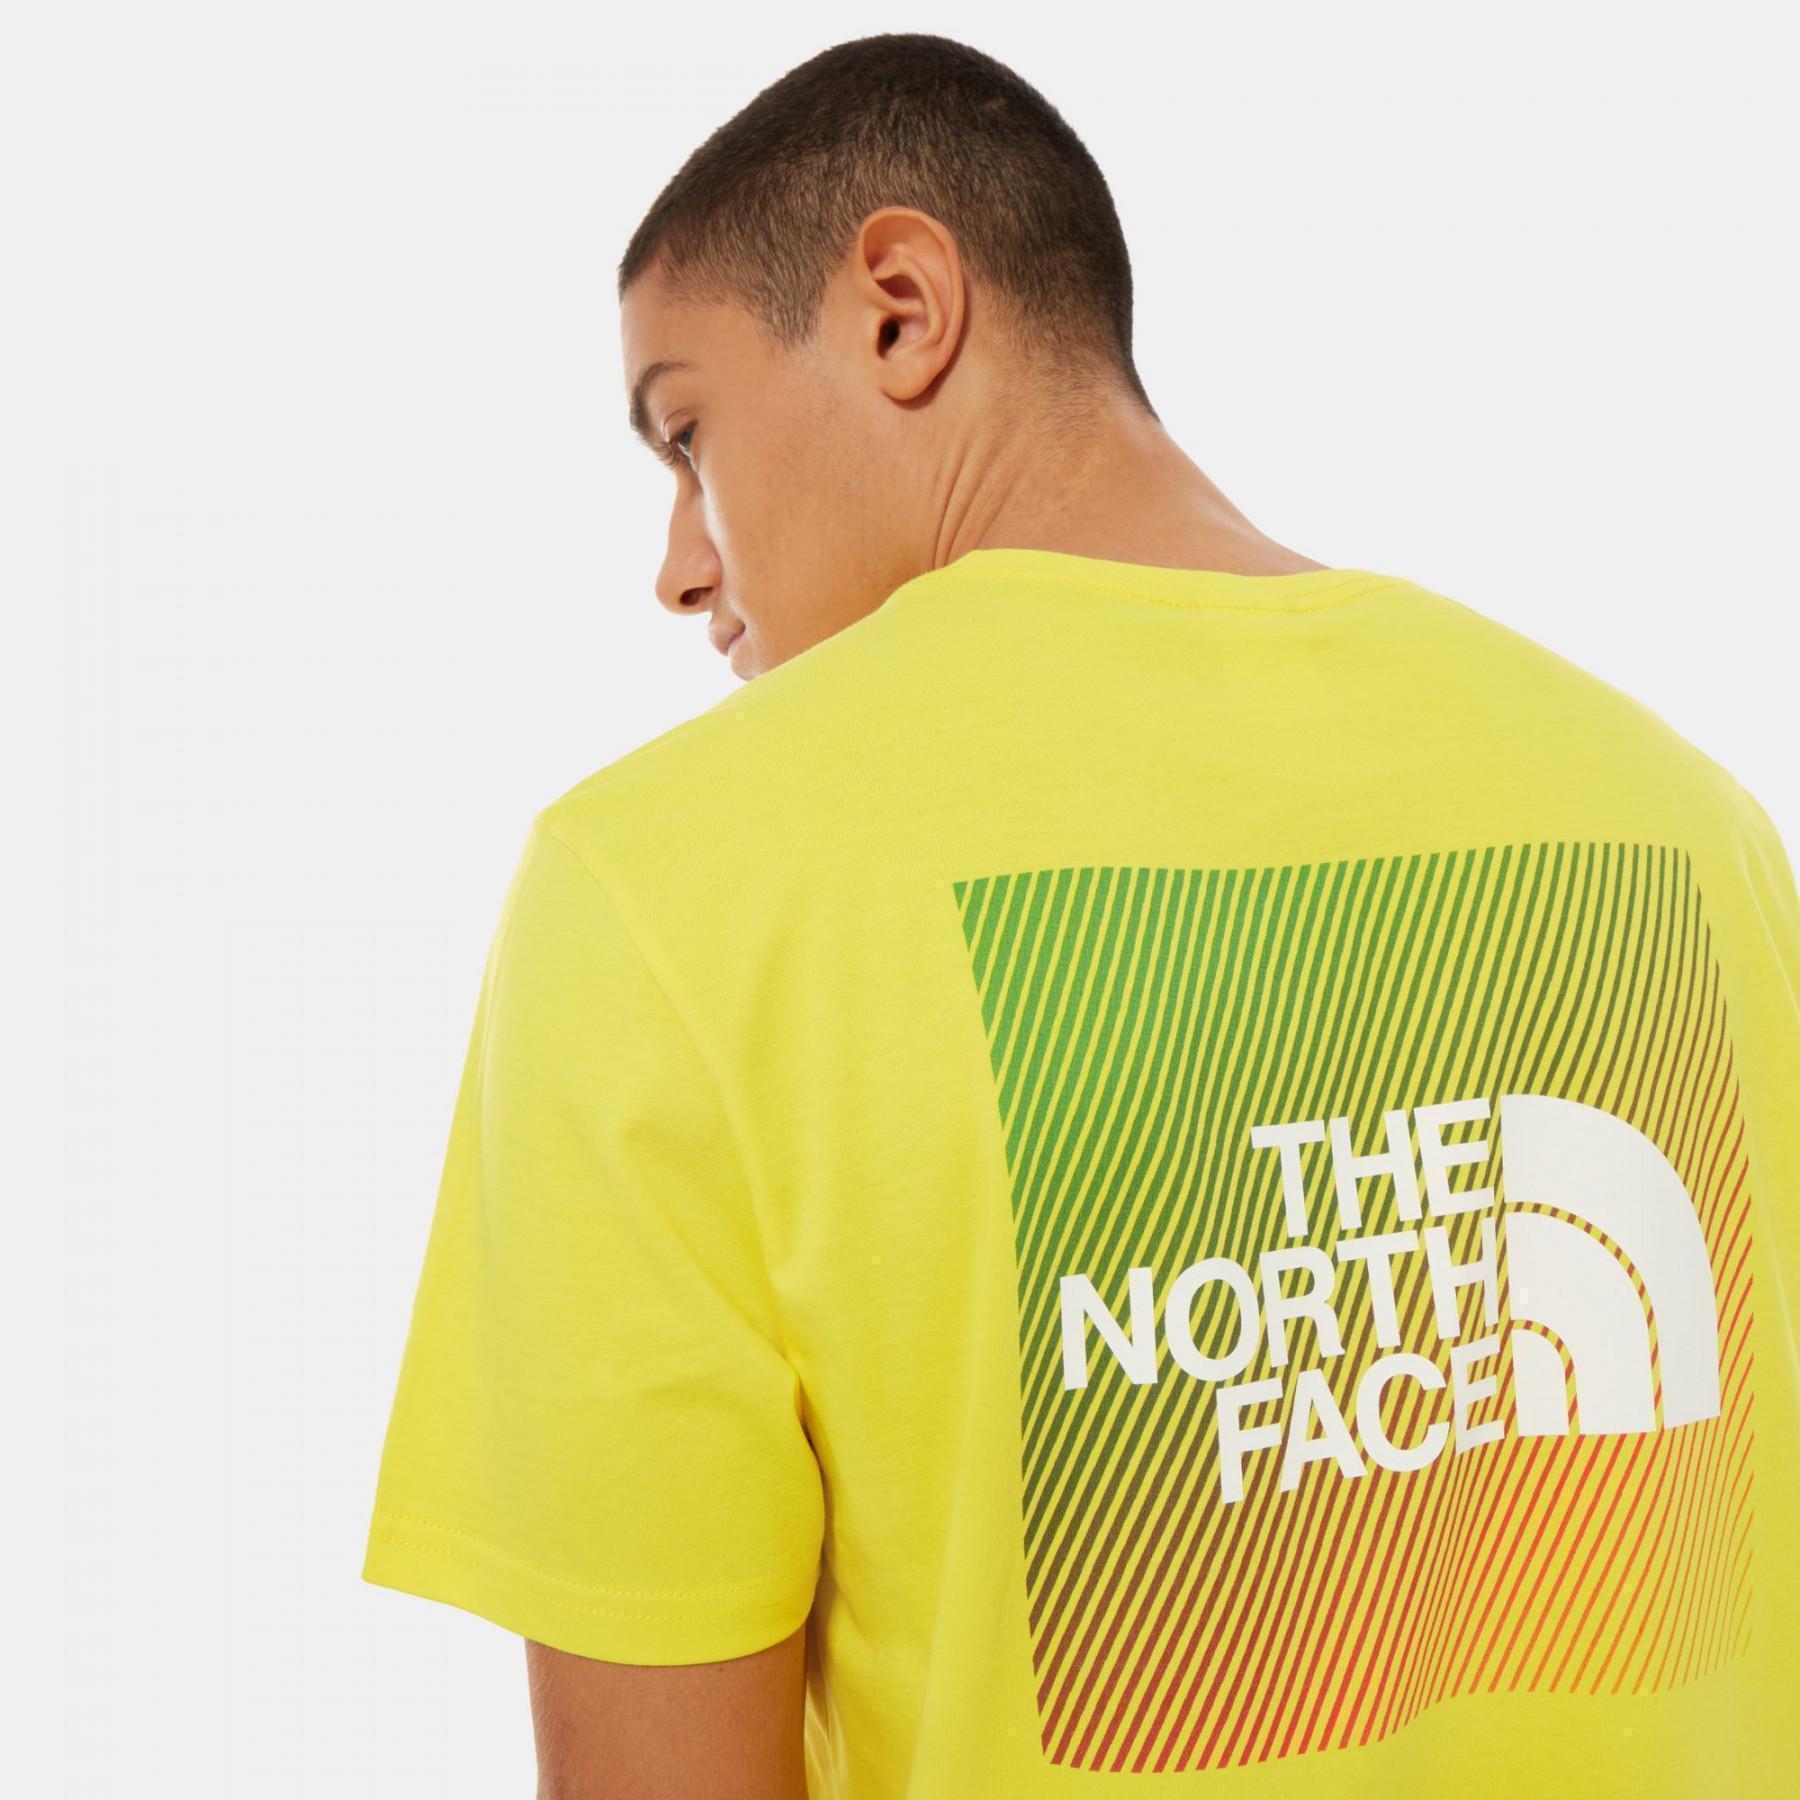 T-shirt The North Face Rainbow